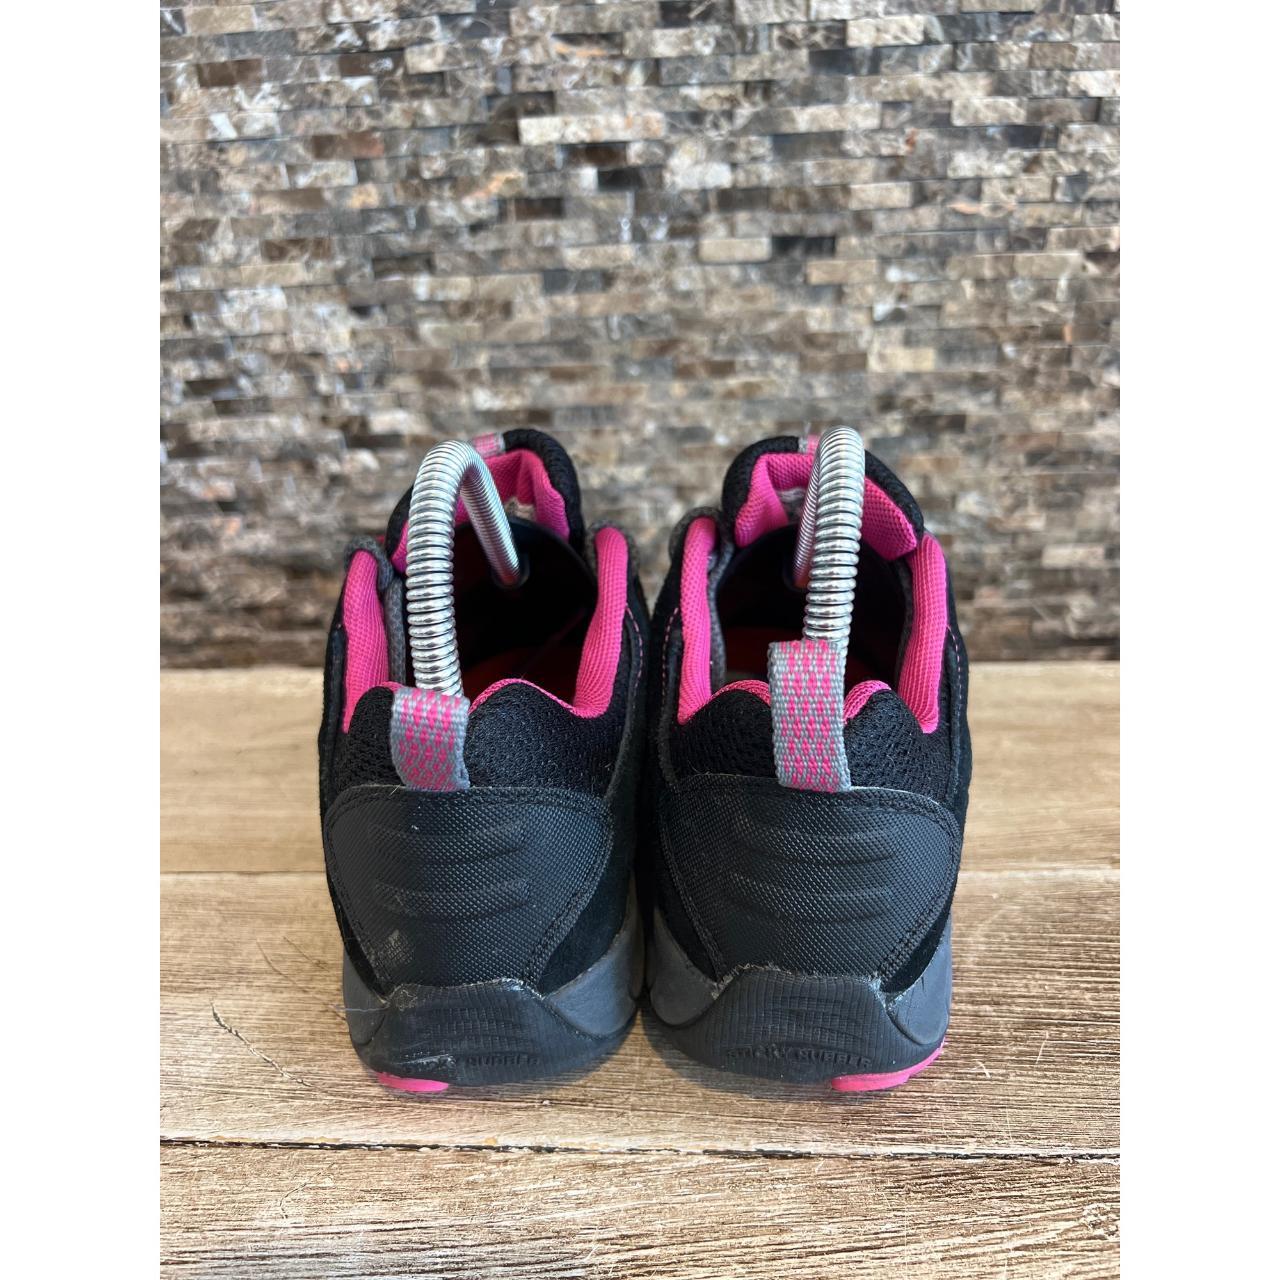 Merrell Womens Hiking Shoes Gray Black Pink Trail... - Depop